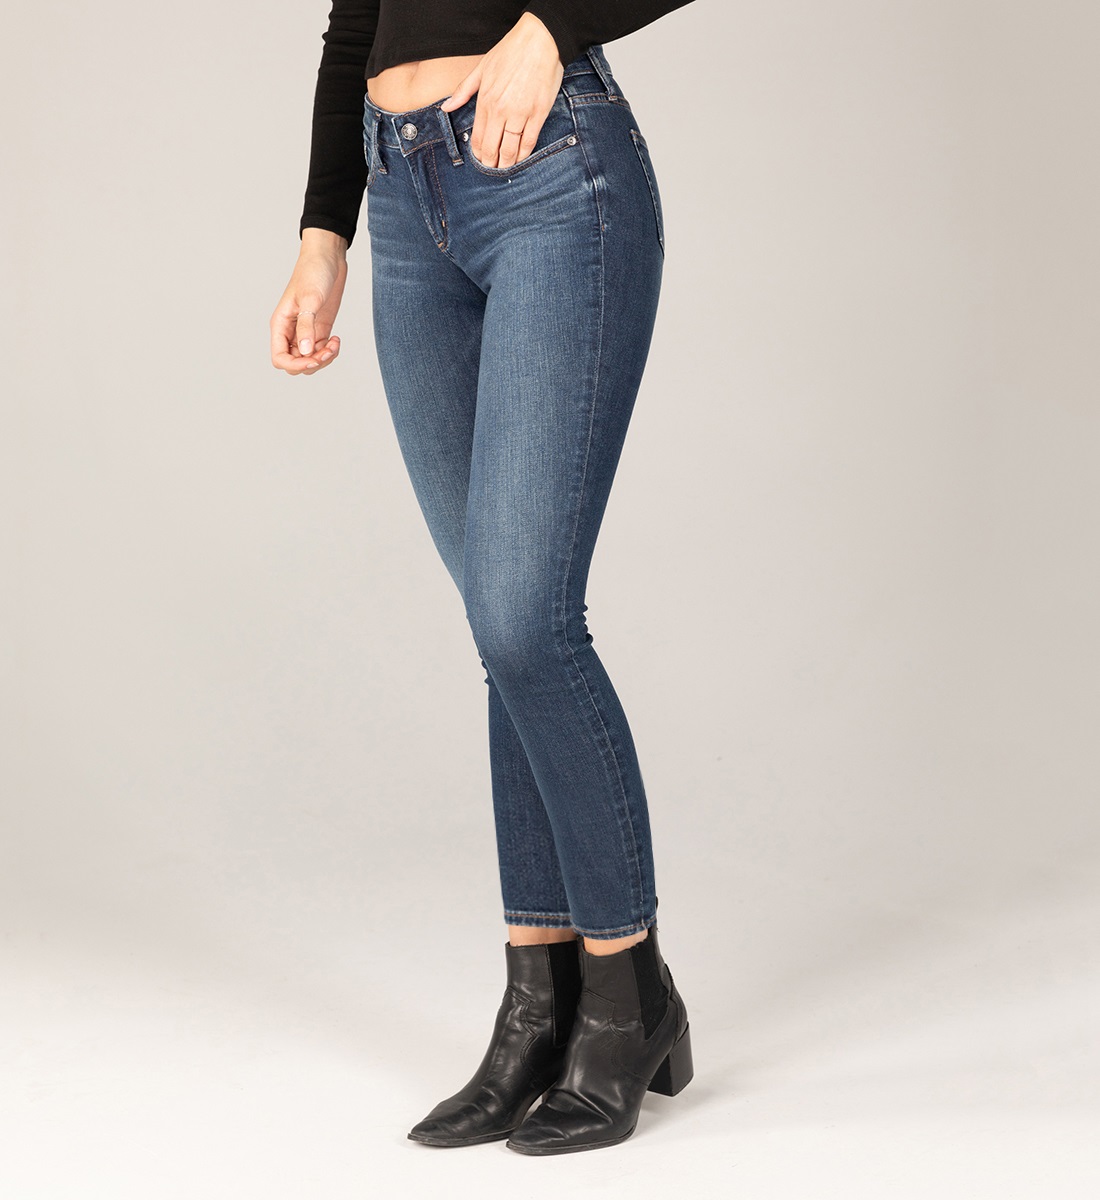 90114A New Silver Jeans SUKI Mid-Rise Skinny Leg Inseams 31 Good Price